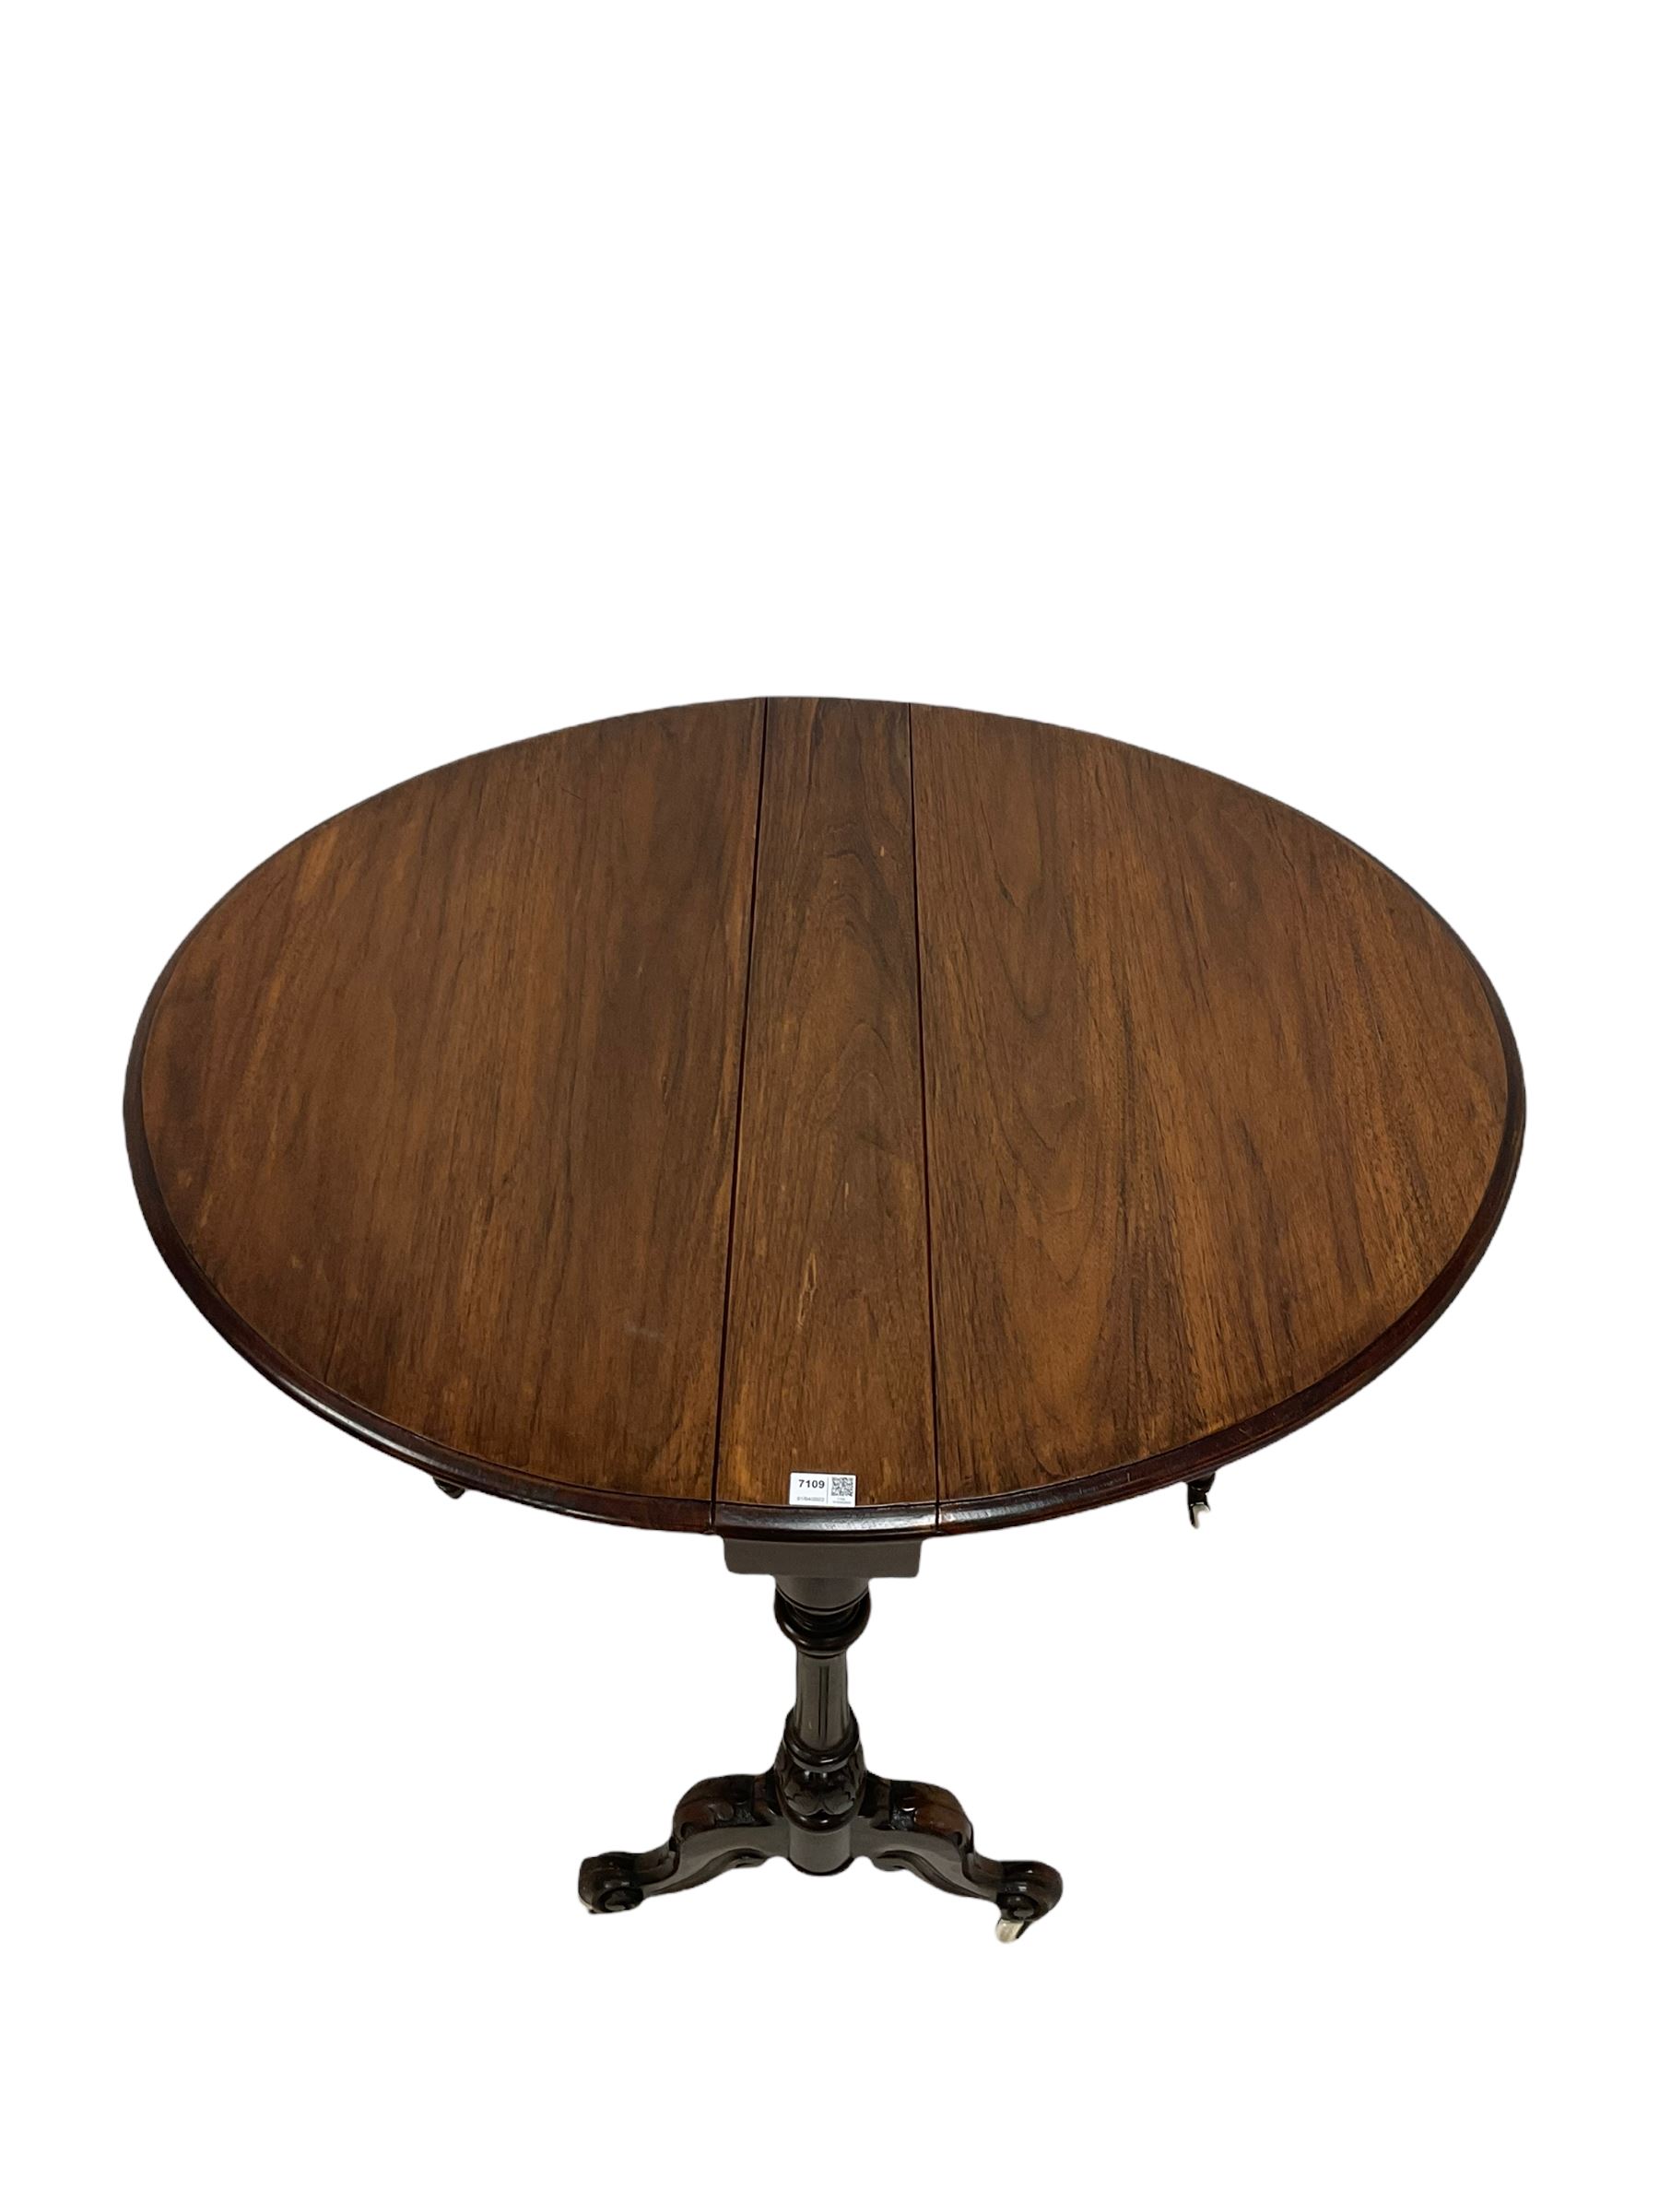 Victorian mahogany drop leaf table - Image 3 of 5